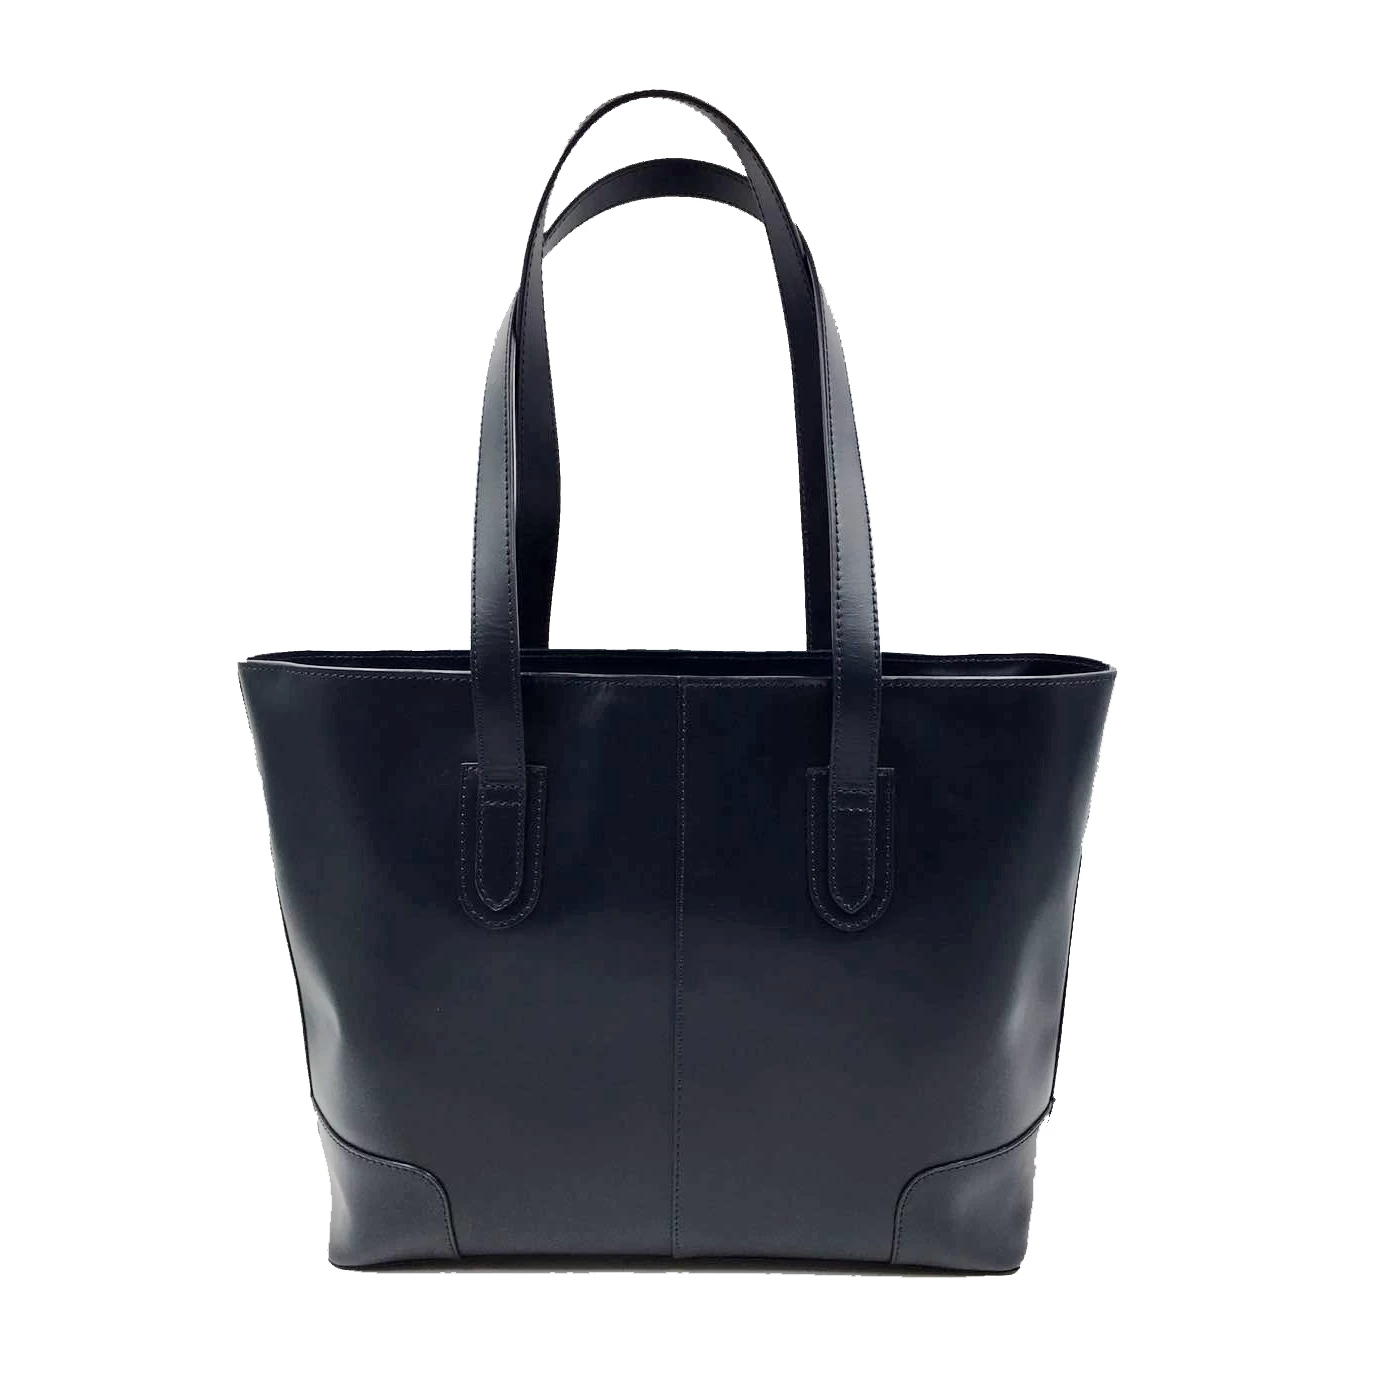 China leather bag supplier- woman handbag-lady bag manufacturer